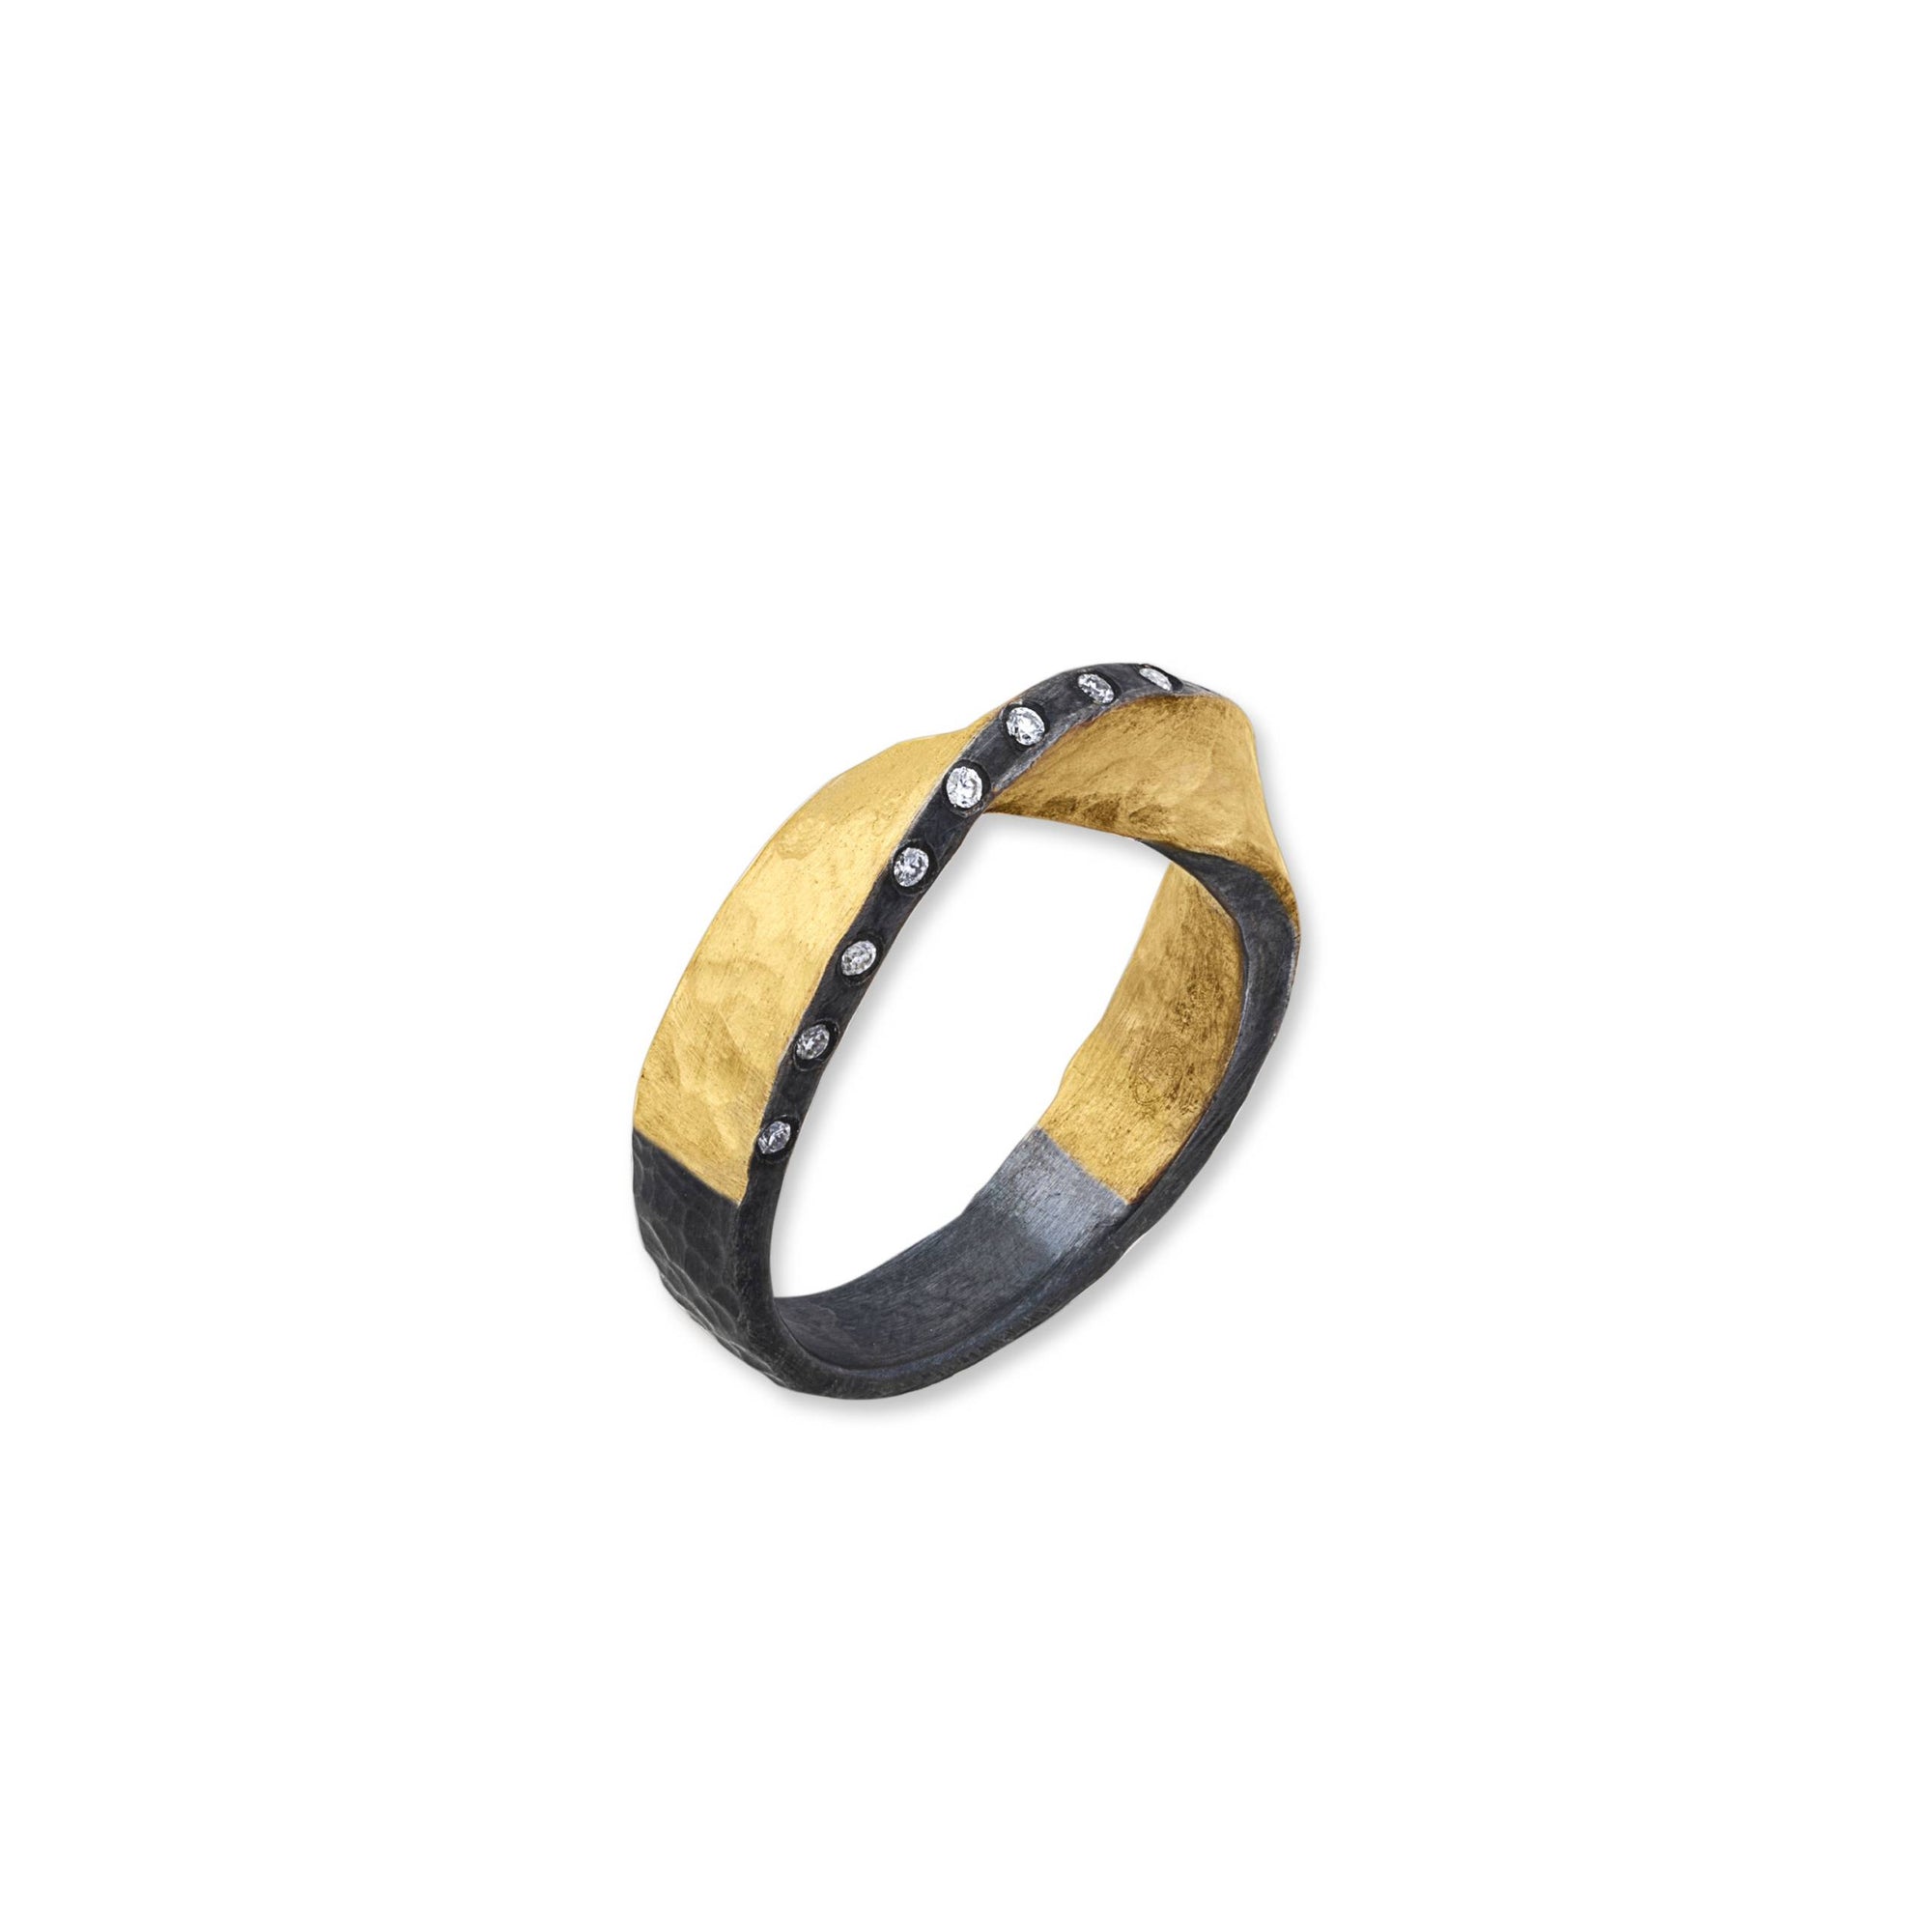 Lika Behar 24K Fusion Gold & Oxidized Silver "Twist" Diamond Ring